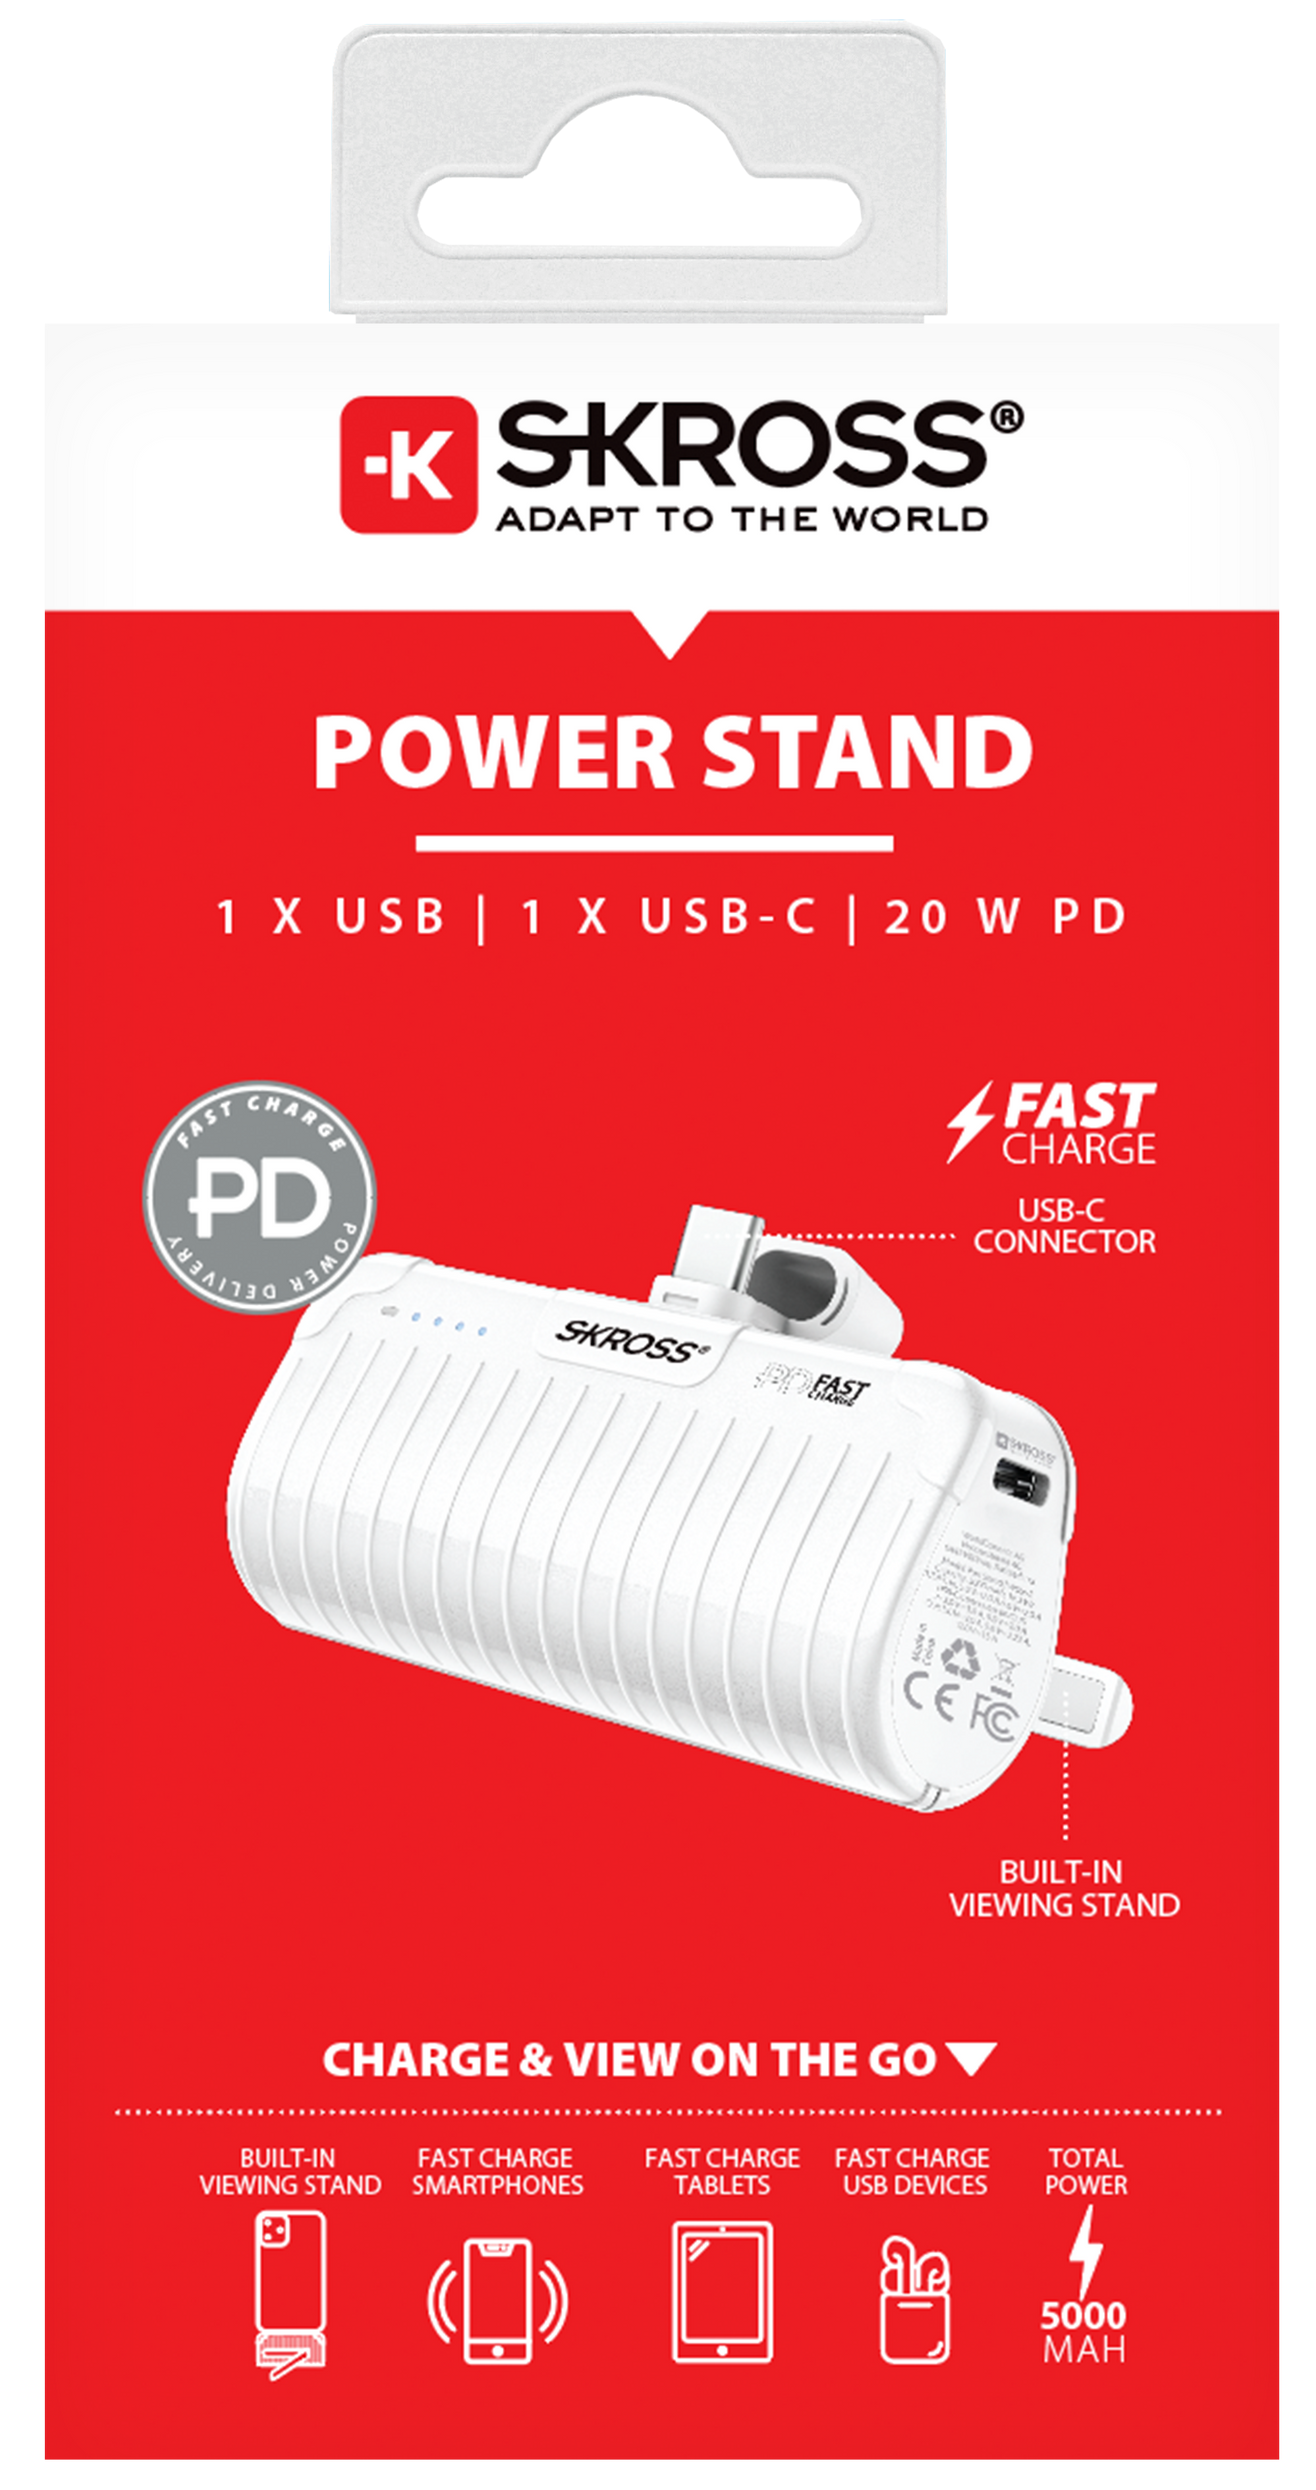 Skross power stand retail packaging